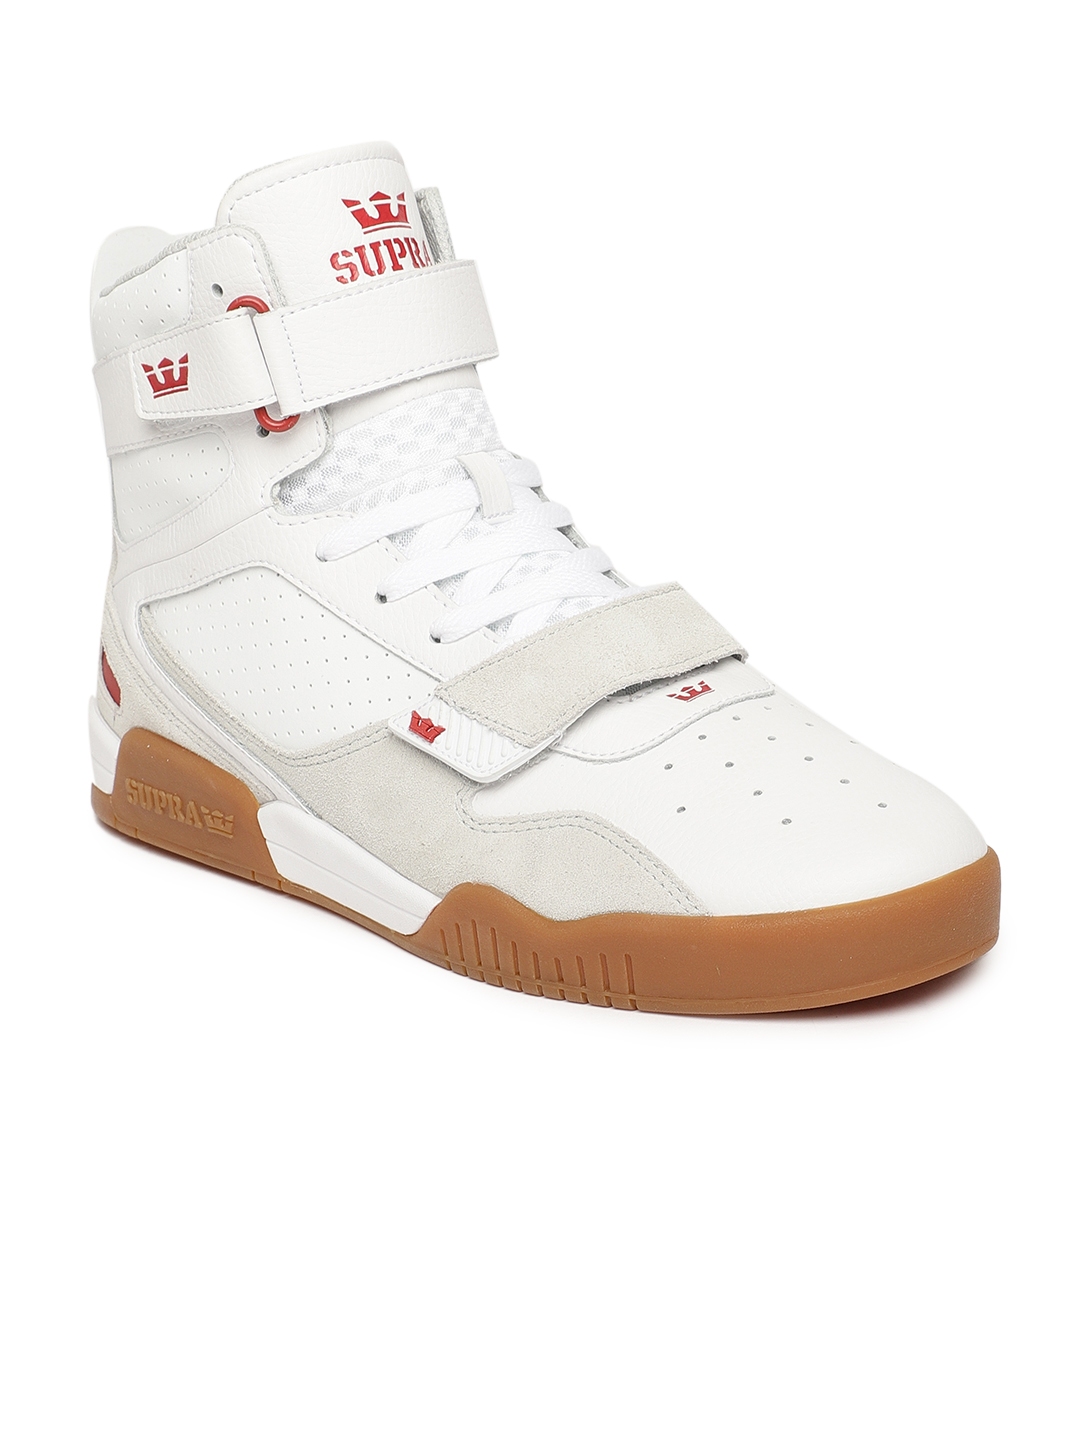 supra white high top sneakers